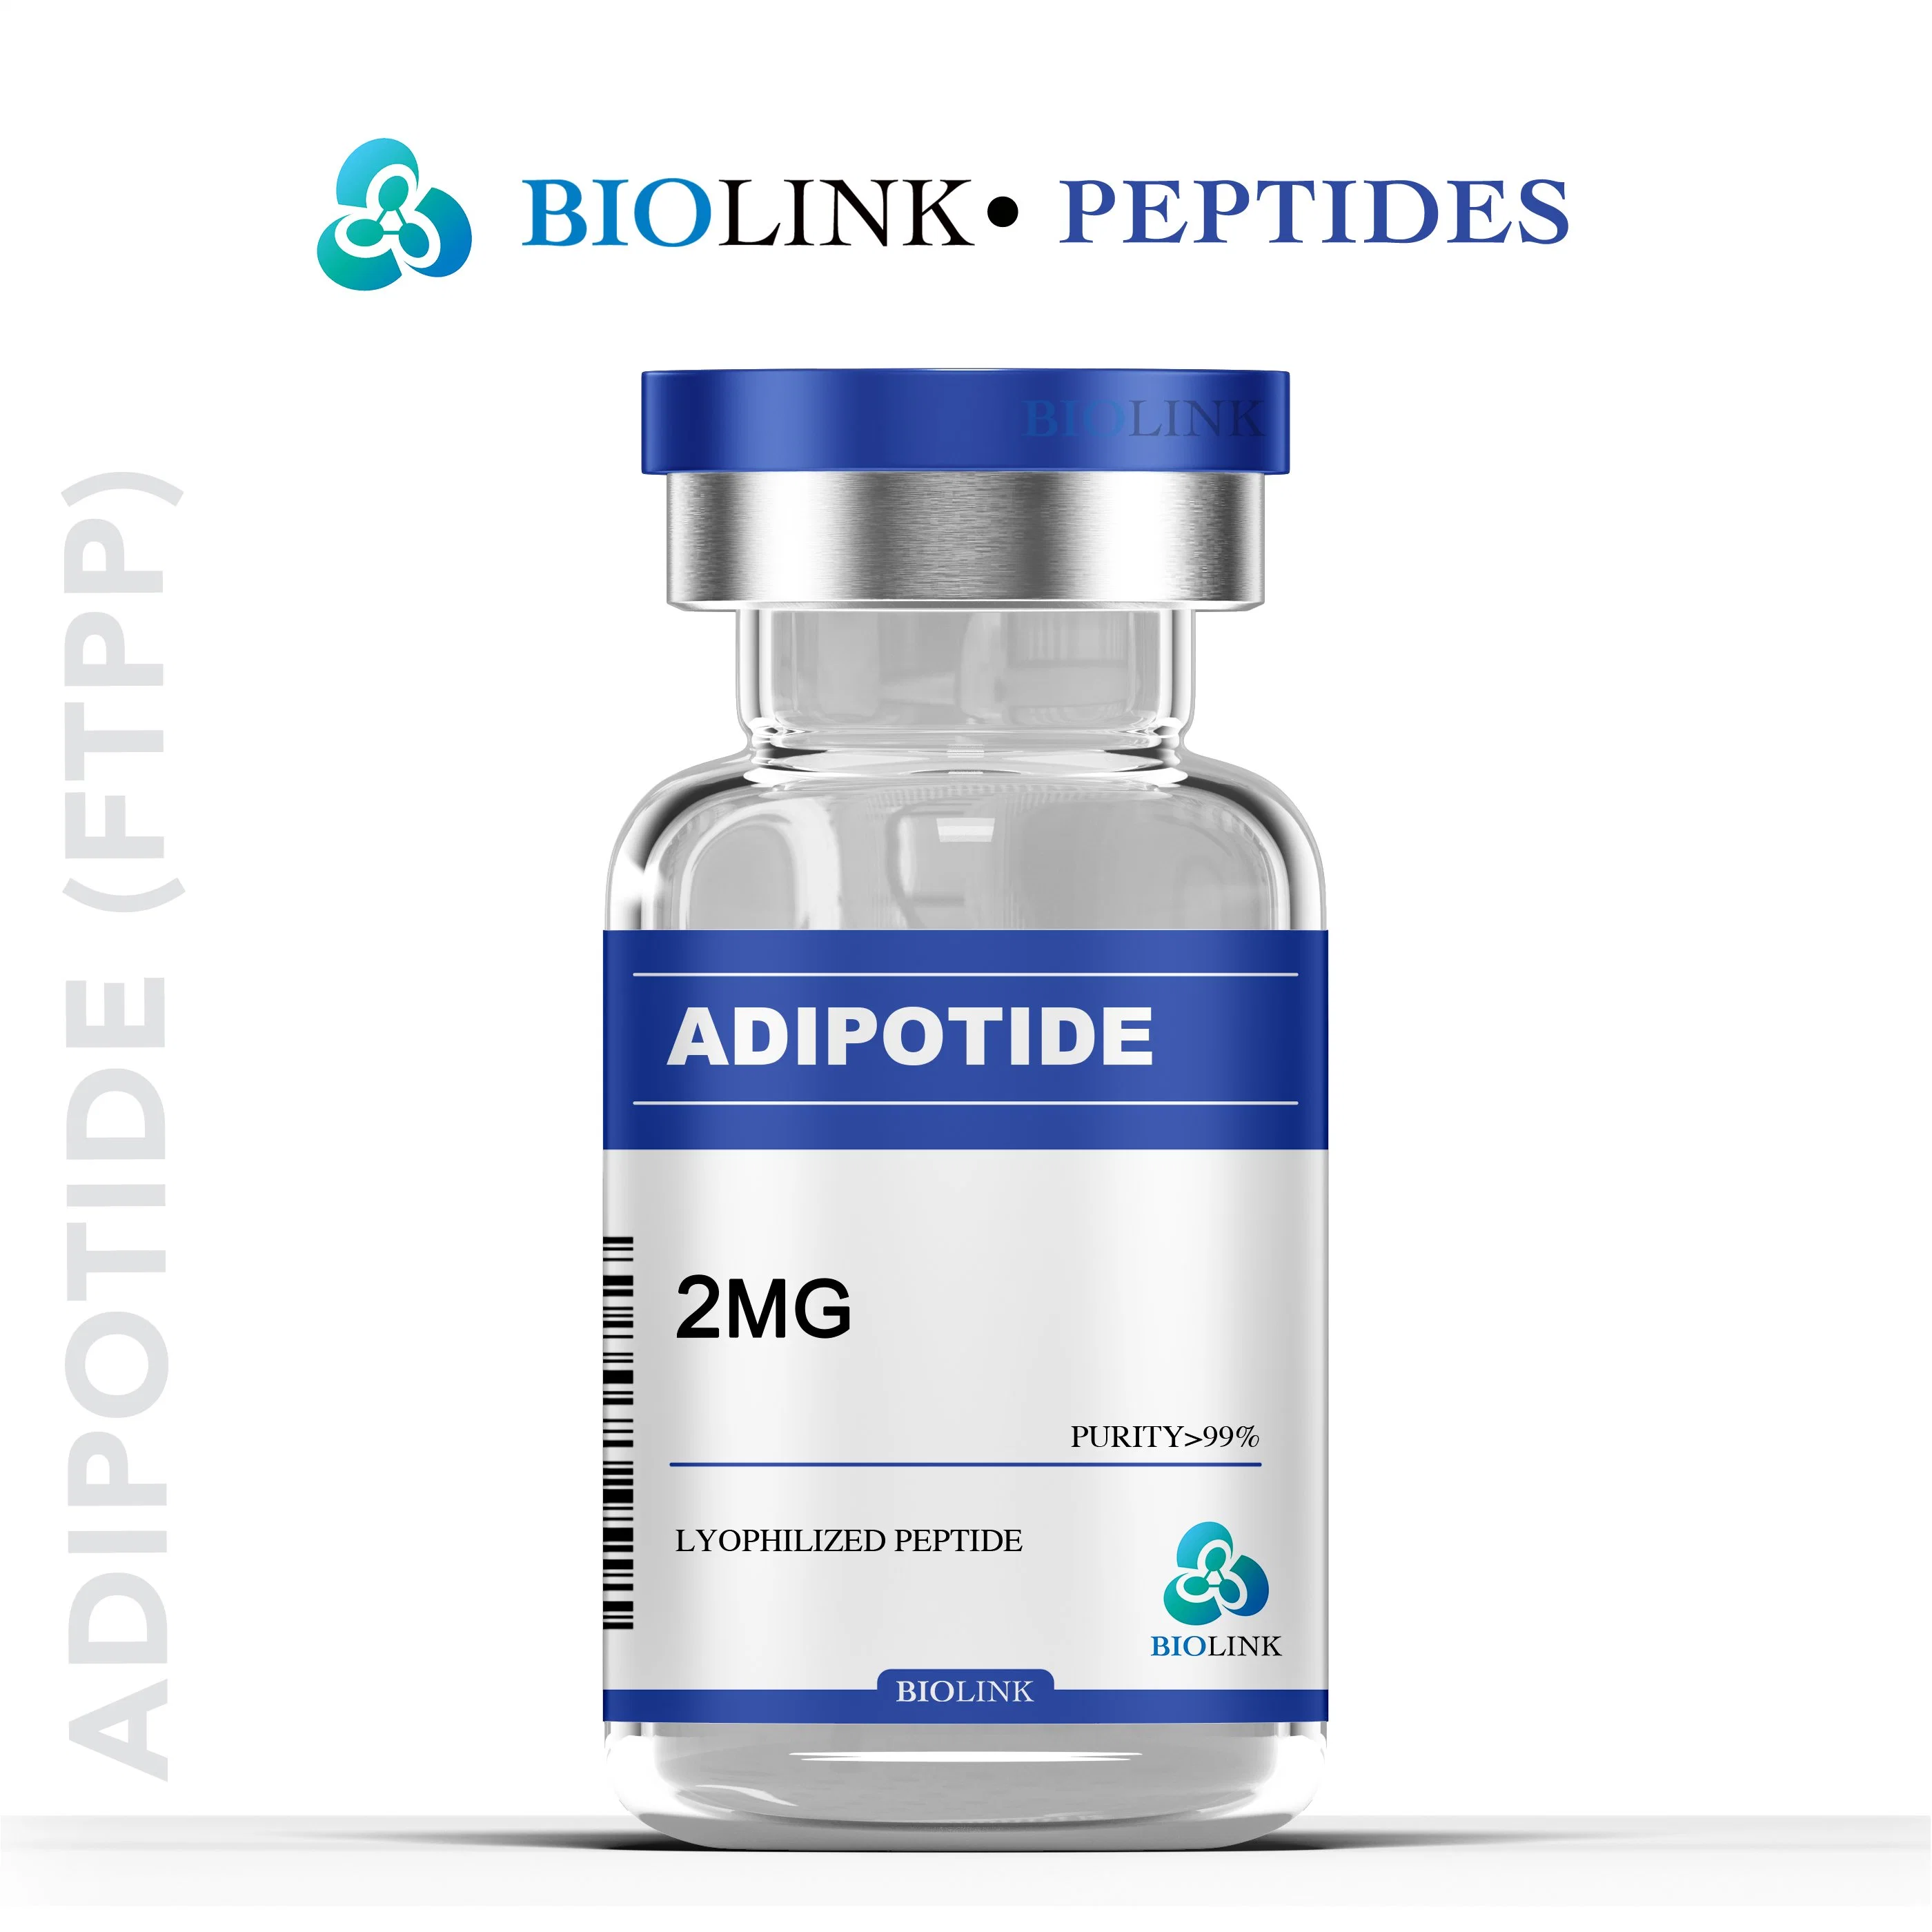 100% Pure GLP-1 Receptor Retatrutide Tirzepatide Semagluide USA Biolink Peppidides Warehouse CAS: 2381089-83-2